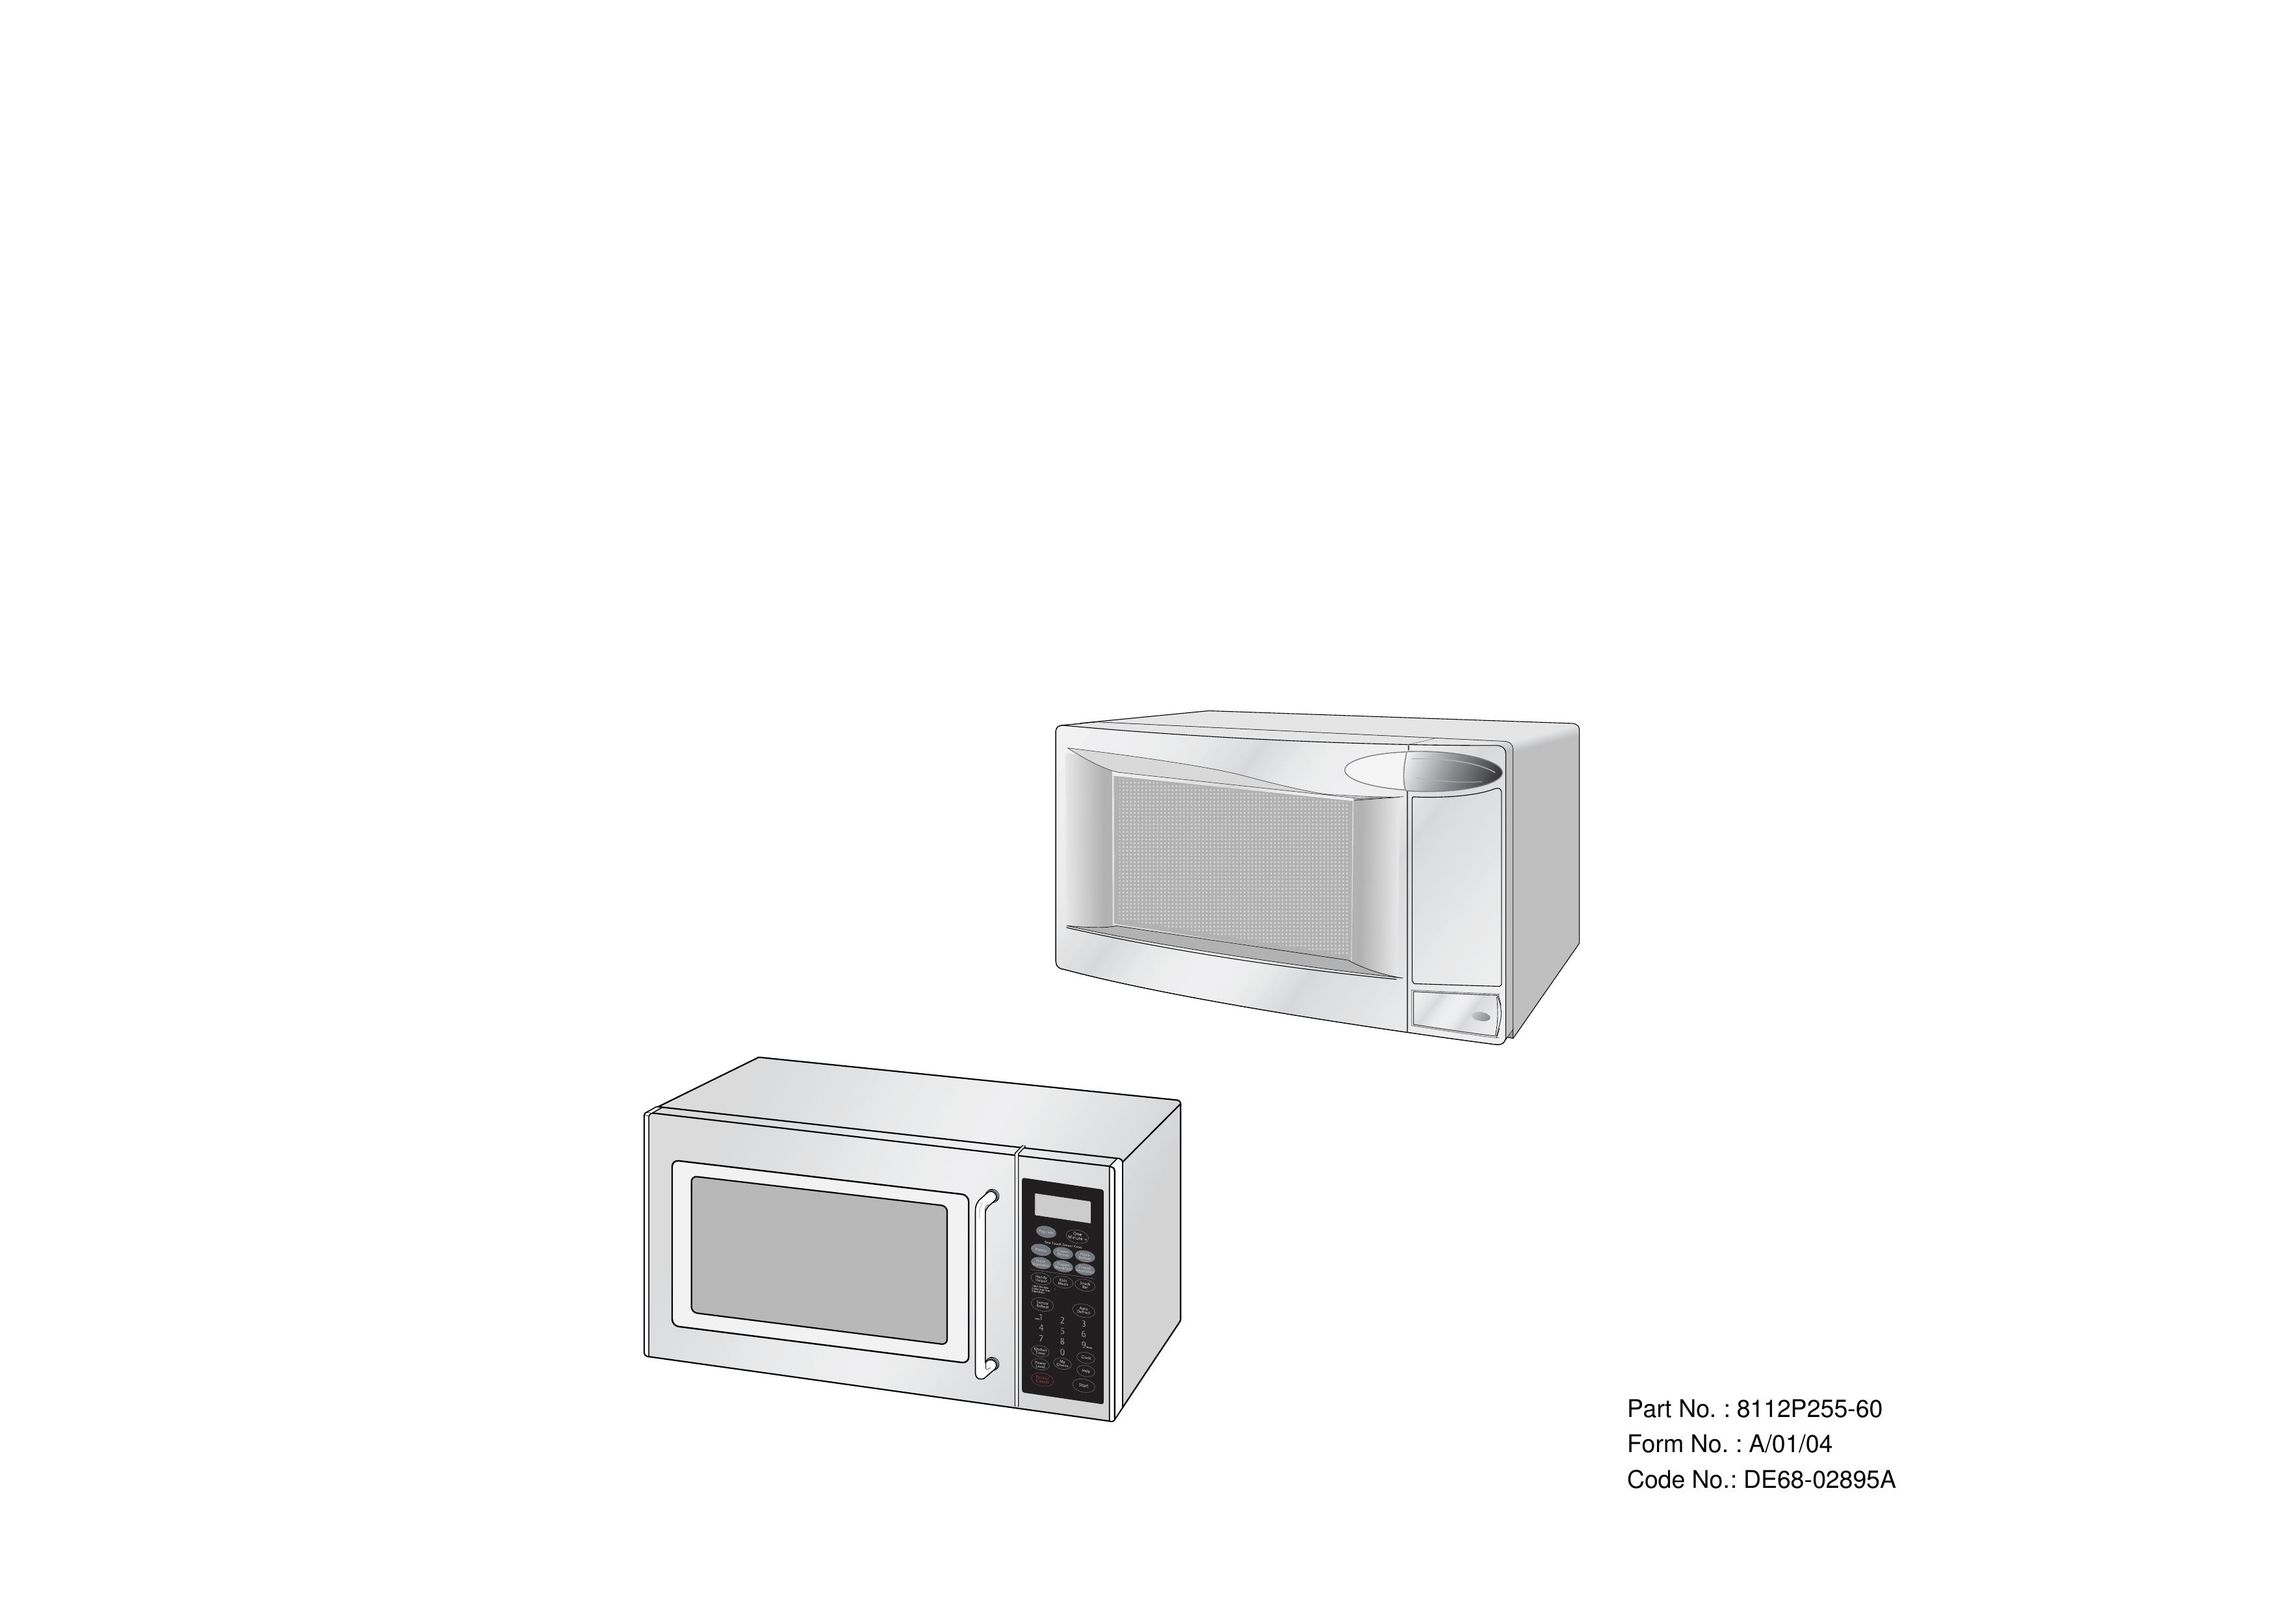 Maytag MMC5193AAS Microwave Oven User Manual